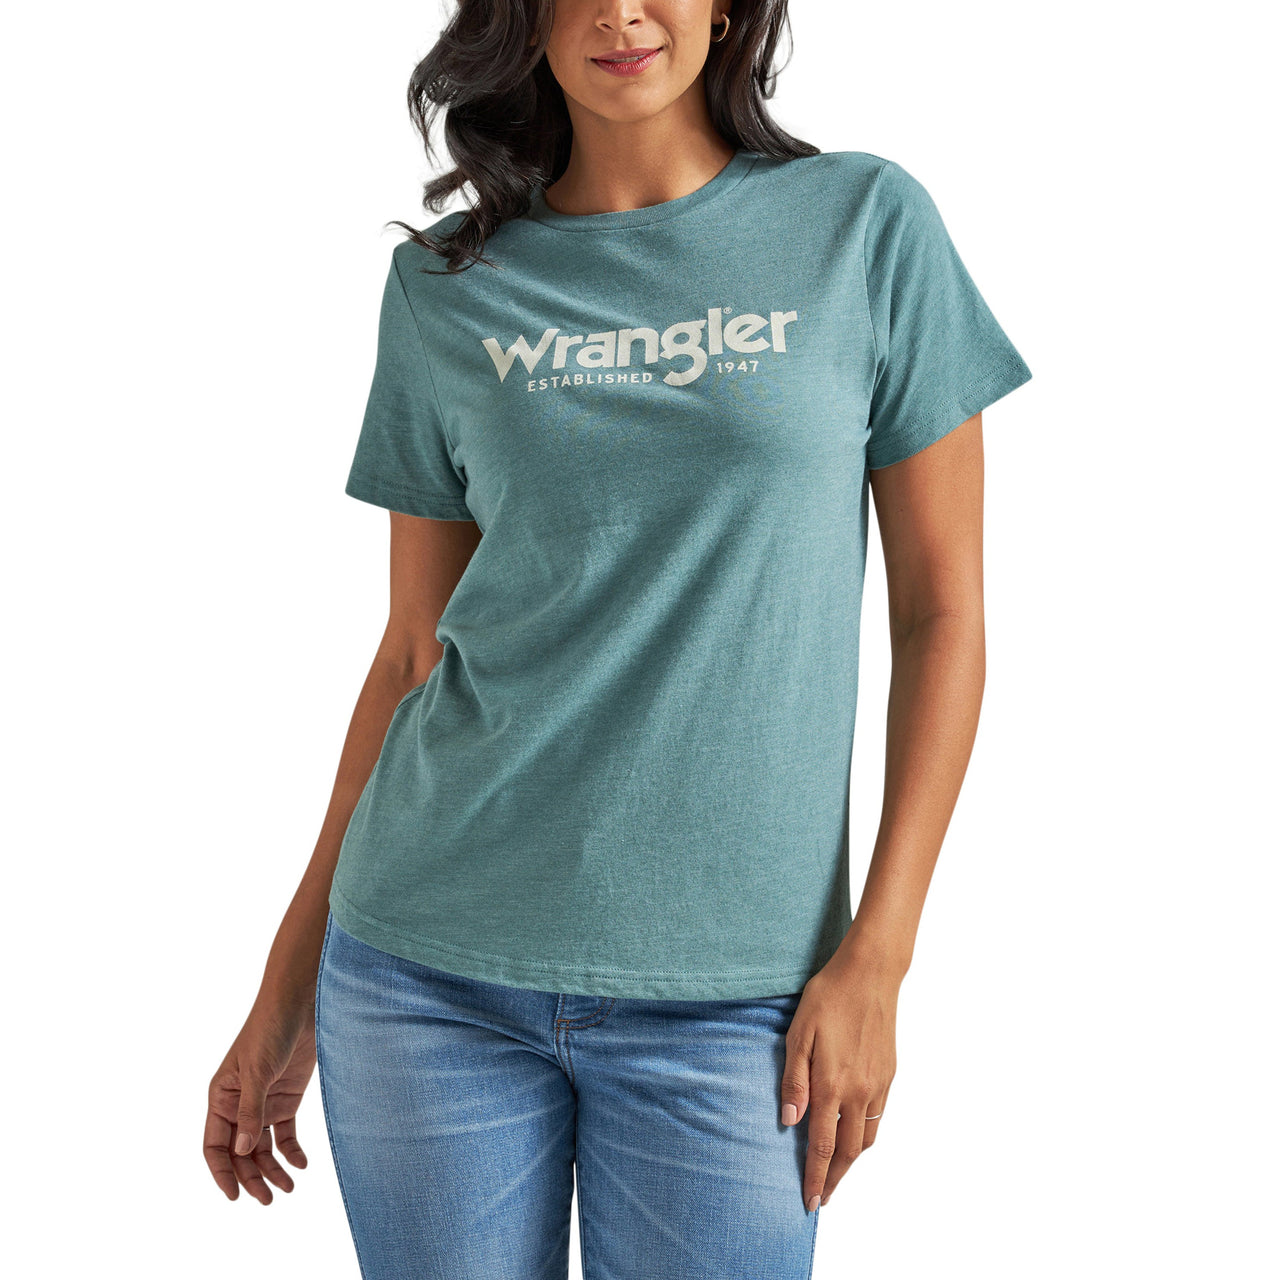 Wrangler Women's Retro Regular Fit Graphic T-Shirt - Teal